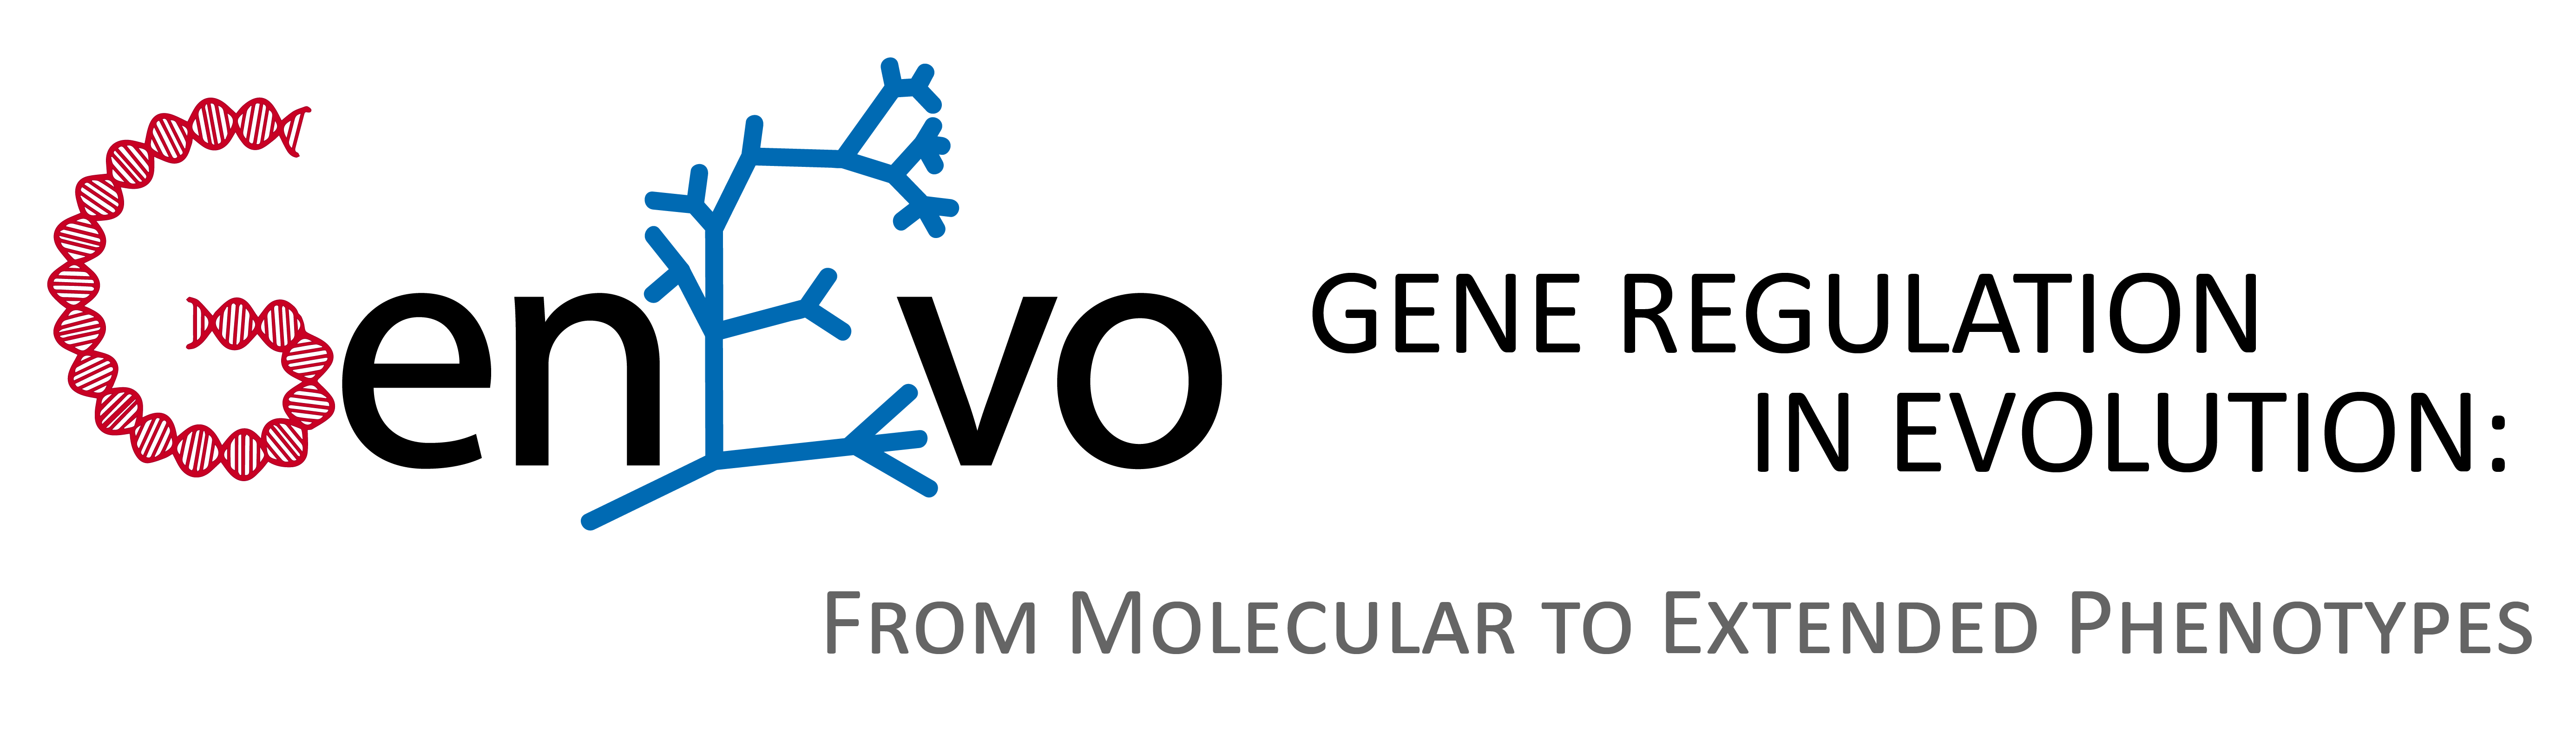 Icon Gene regulation in evolution: from molecular to extended phenotypes (GenEvo)